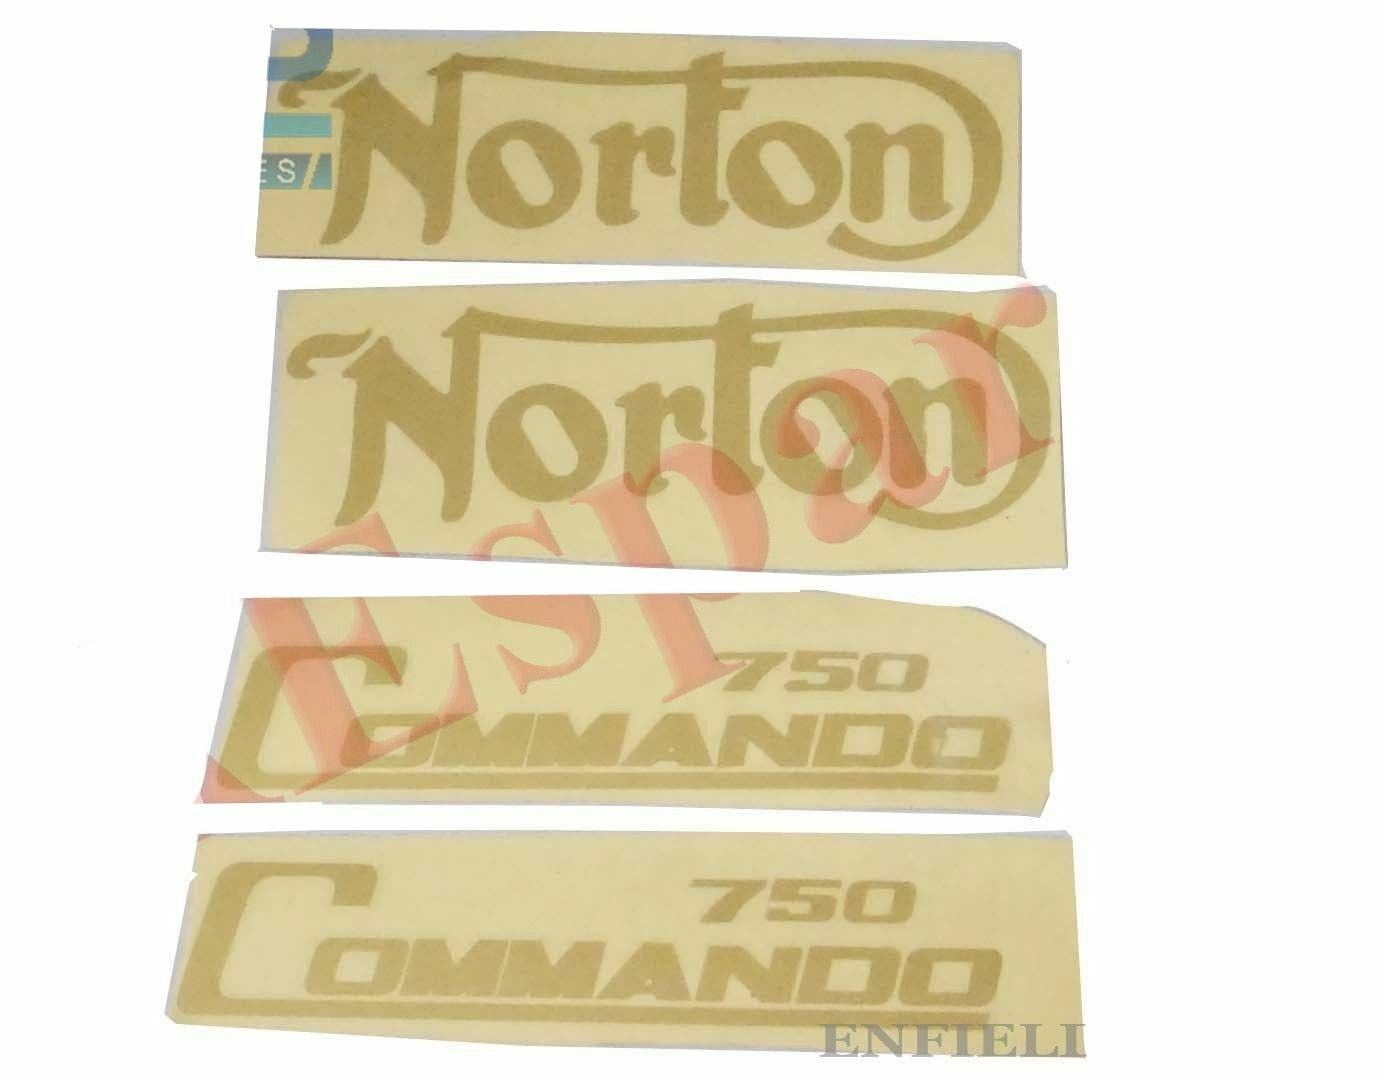 Norton Commando 750 Petrol Fuel Tank Panel golden Sticker x 2 sets 